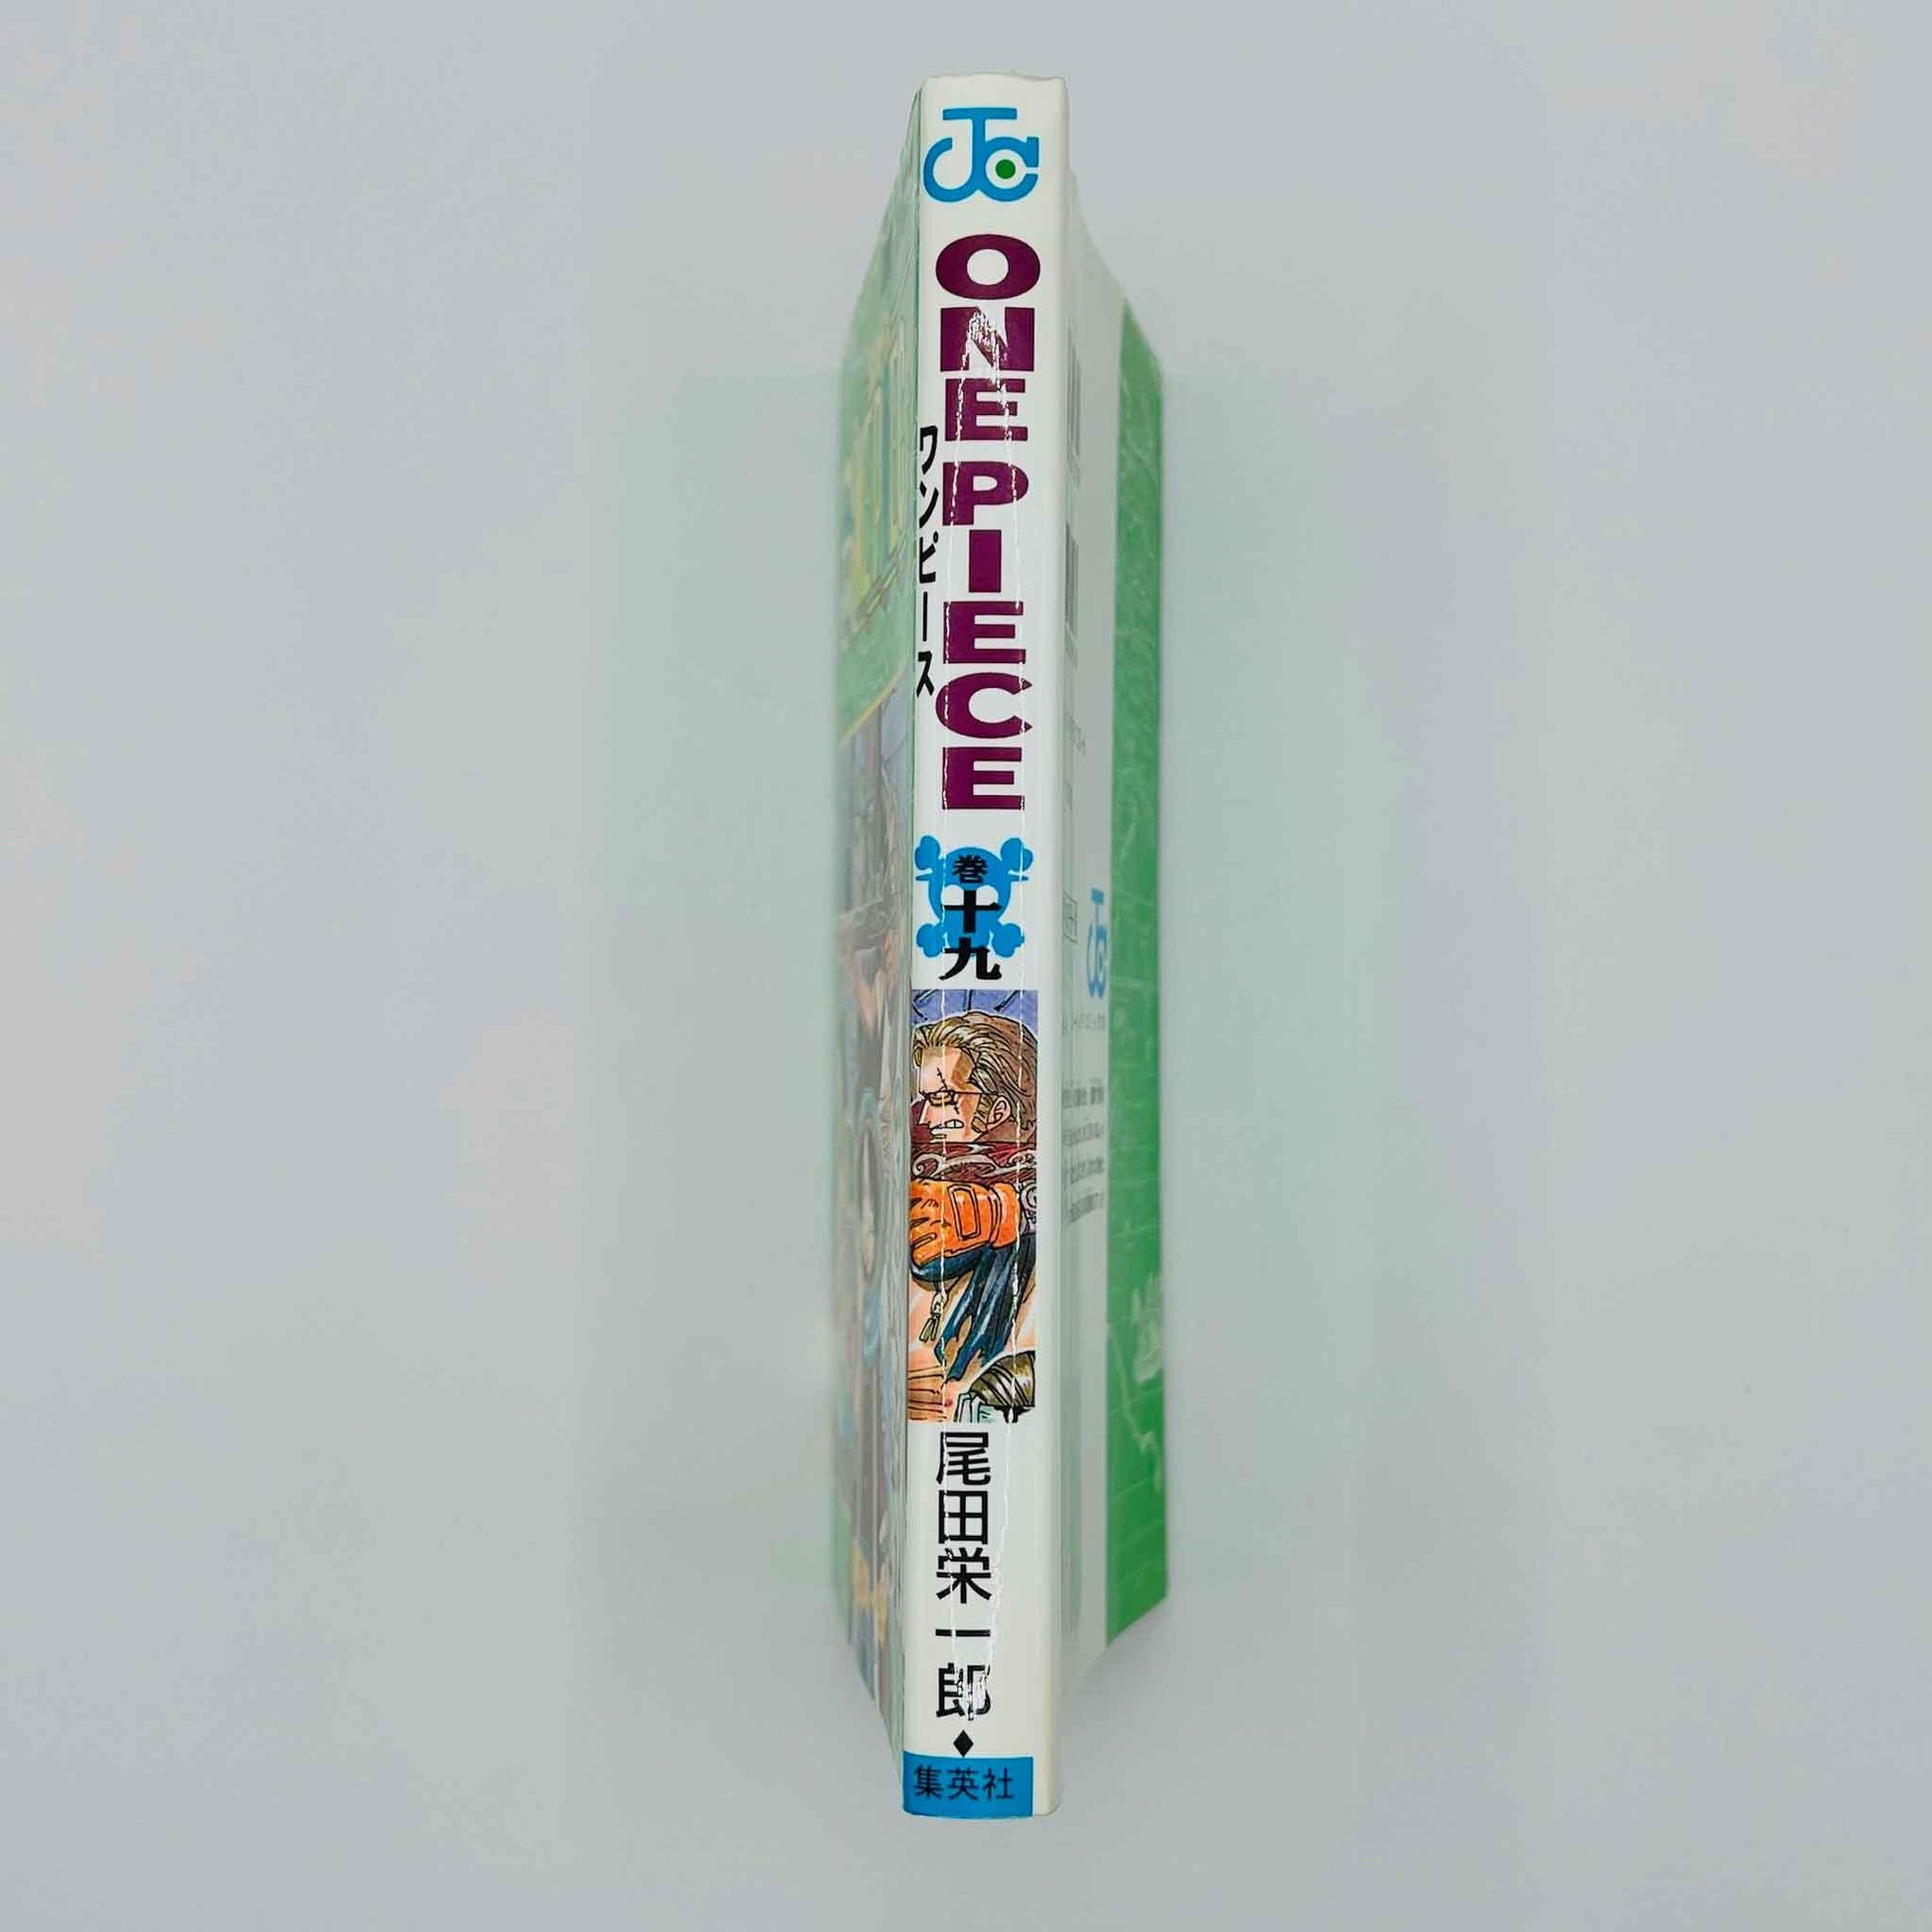 One Piece - Volume 19 - 1stPrint.net - 1st First Print Edition Manga Store - M-OP-19-001